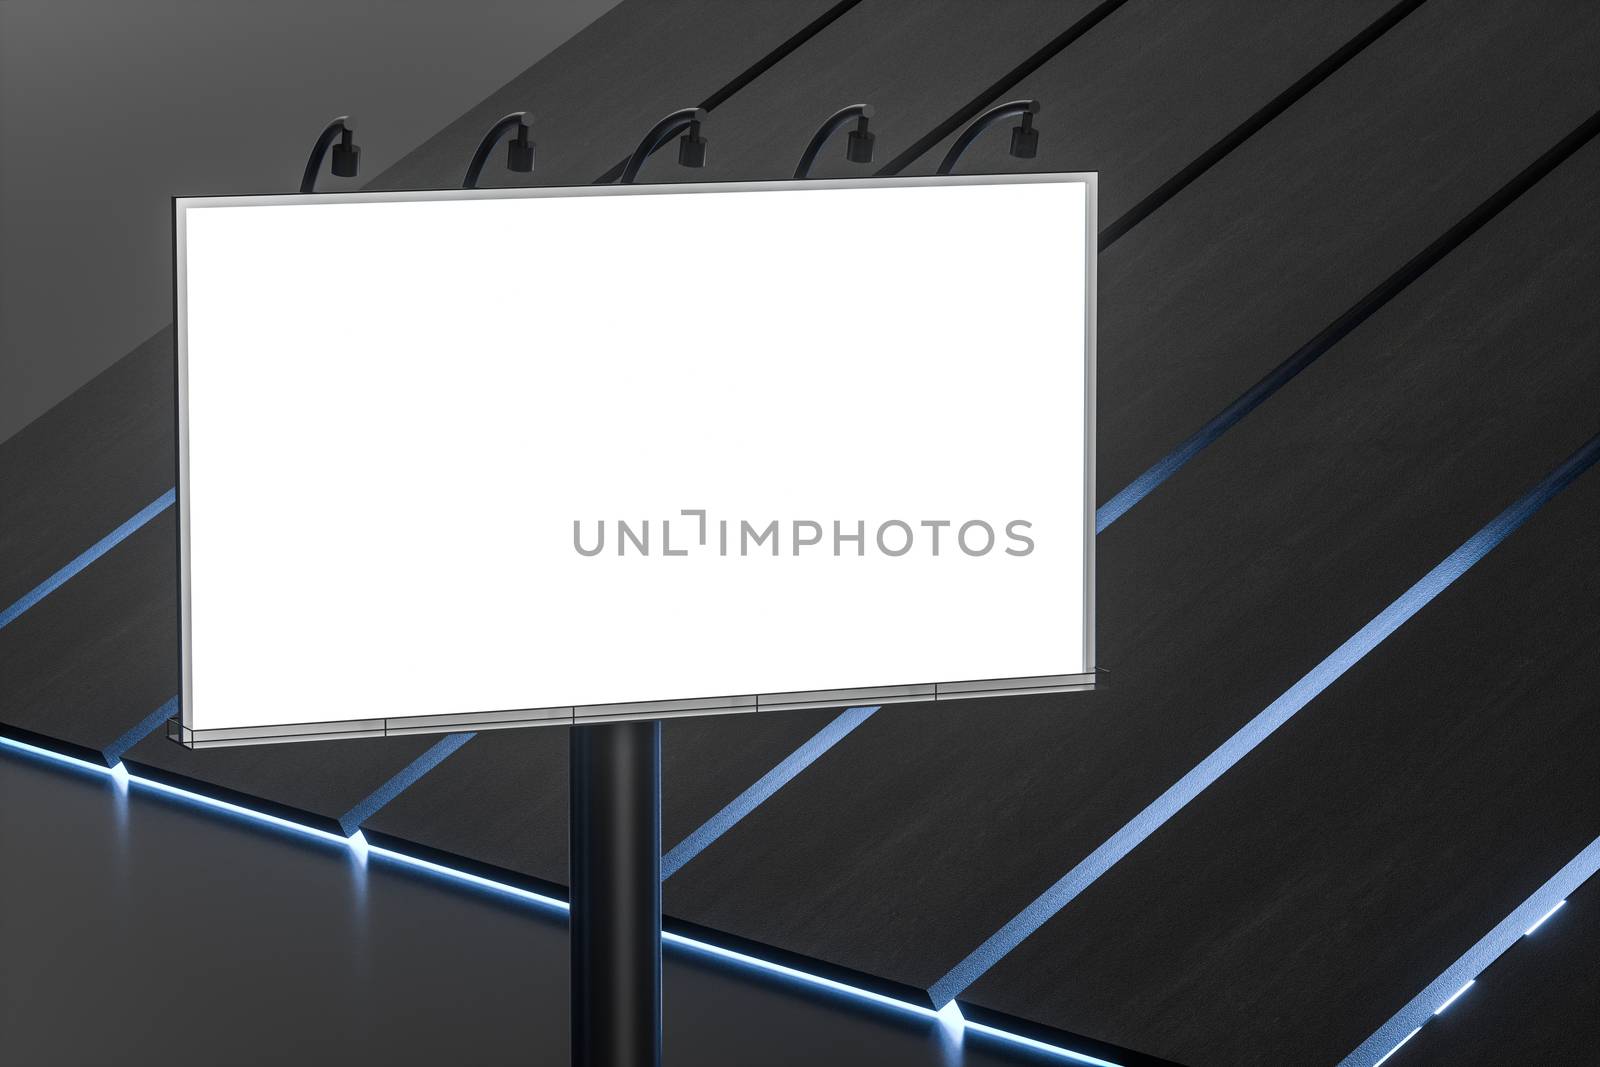 3d rendering, blank advertising board In the night scene. Computer digital image.